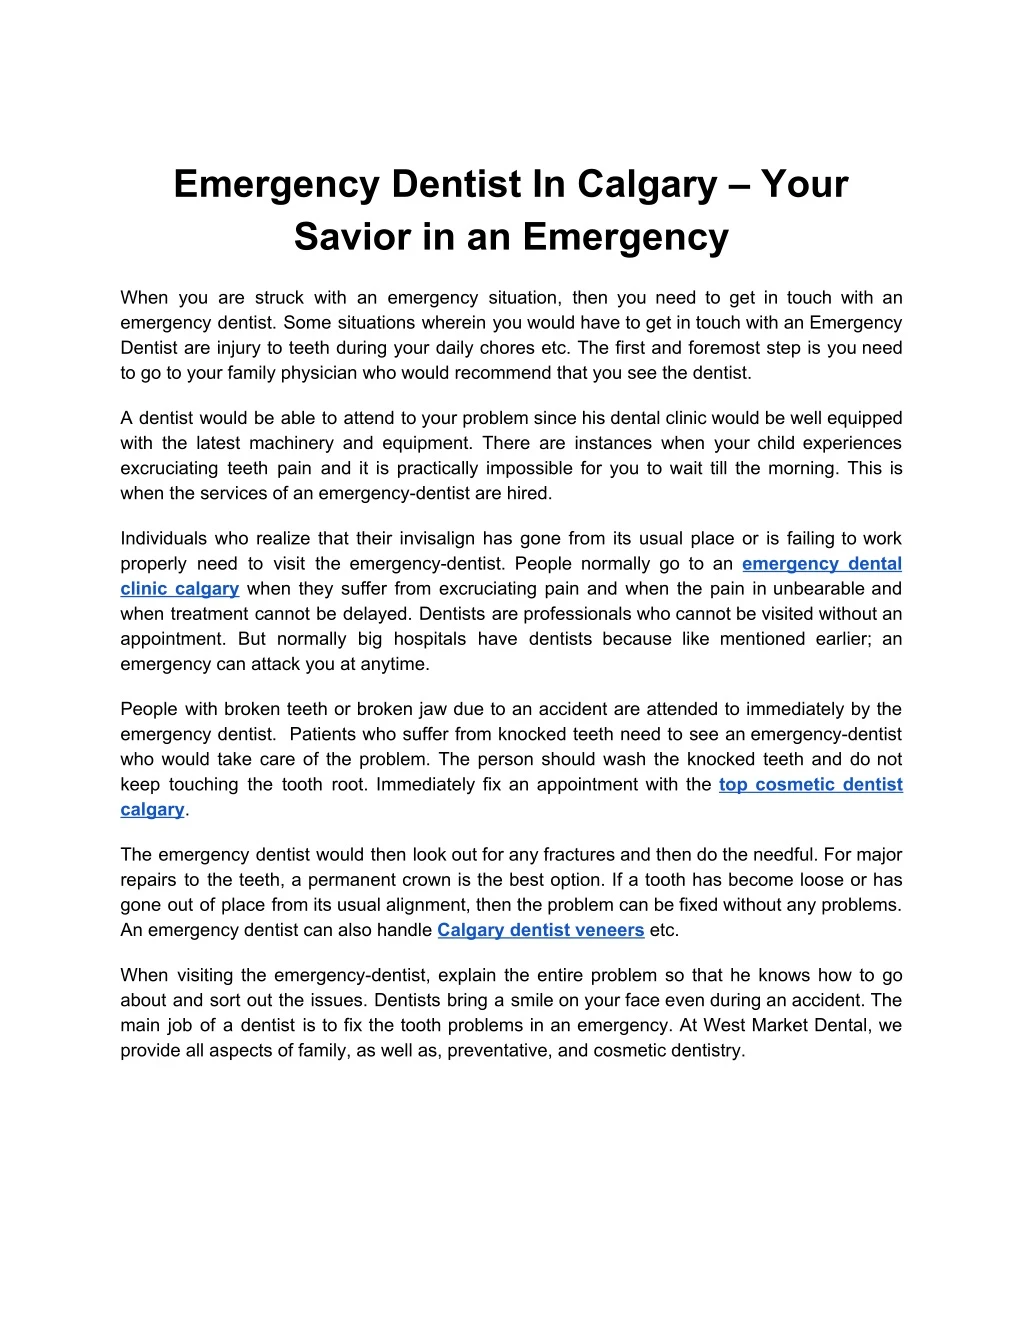 emergency dentist in calgary your savior